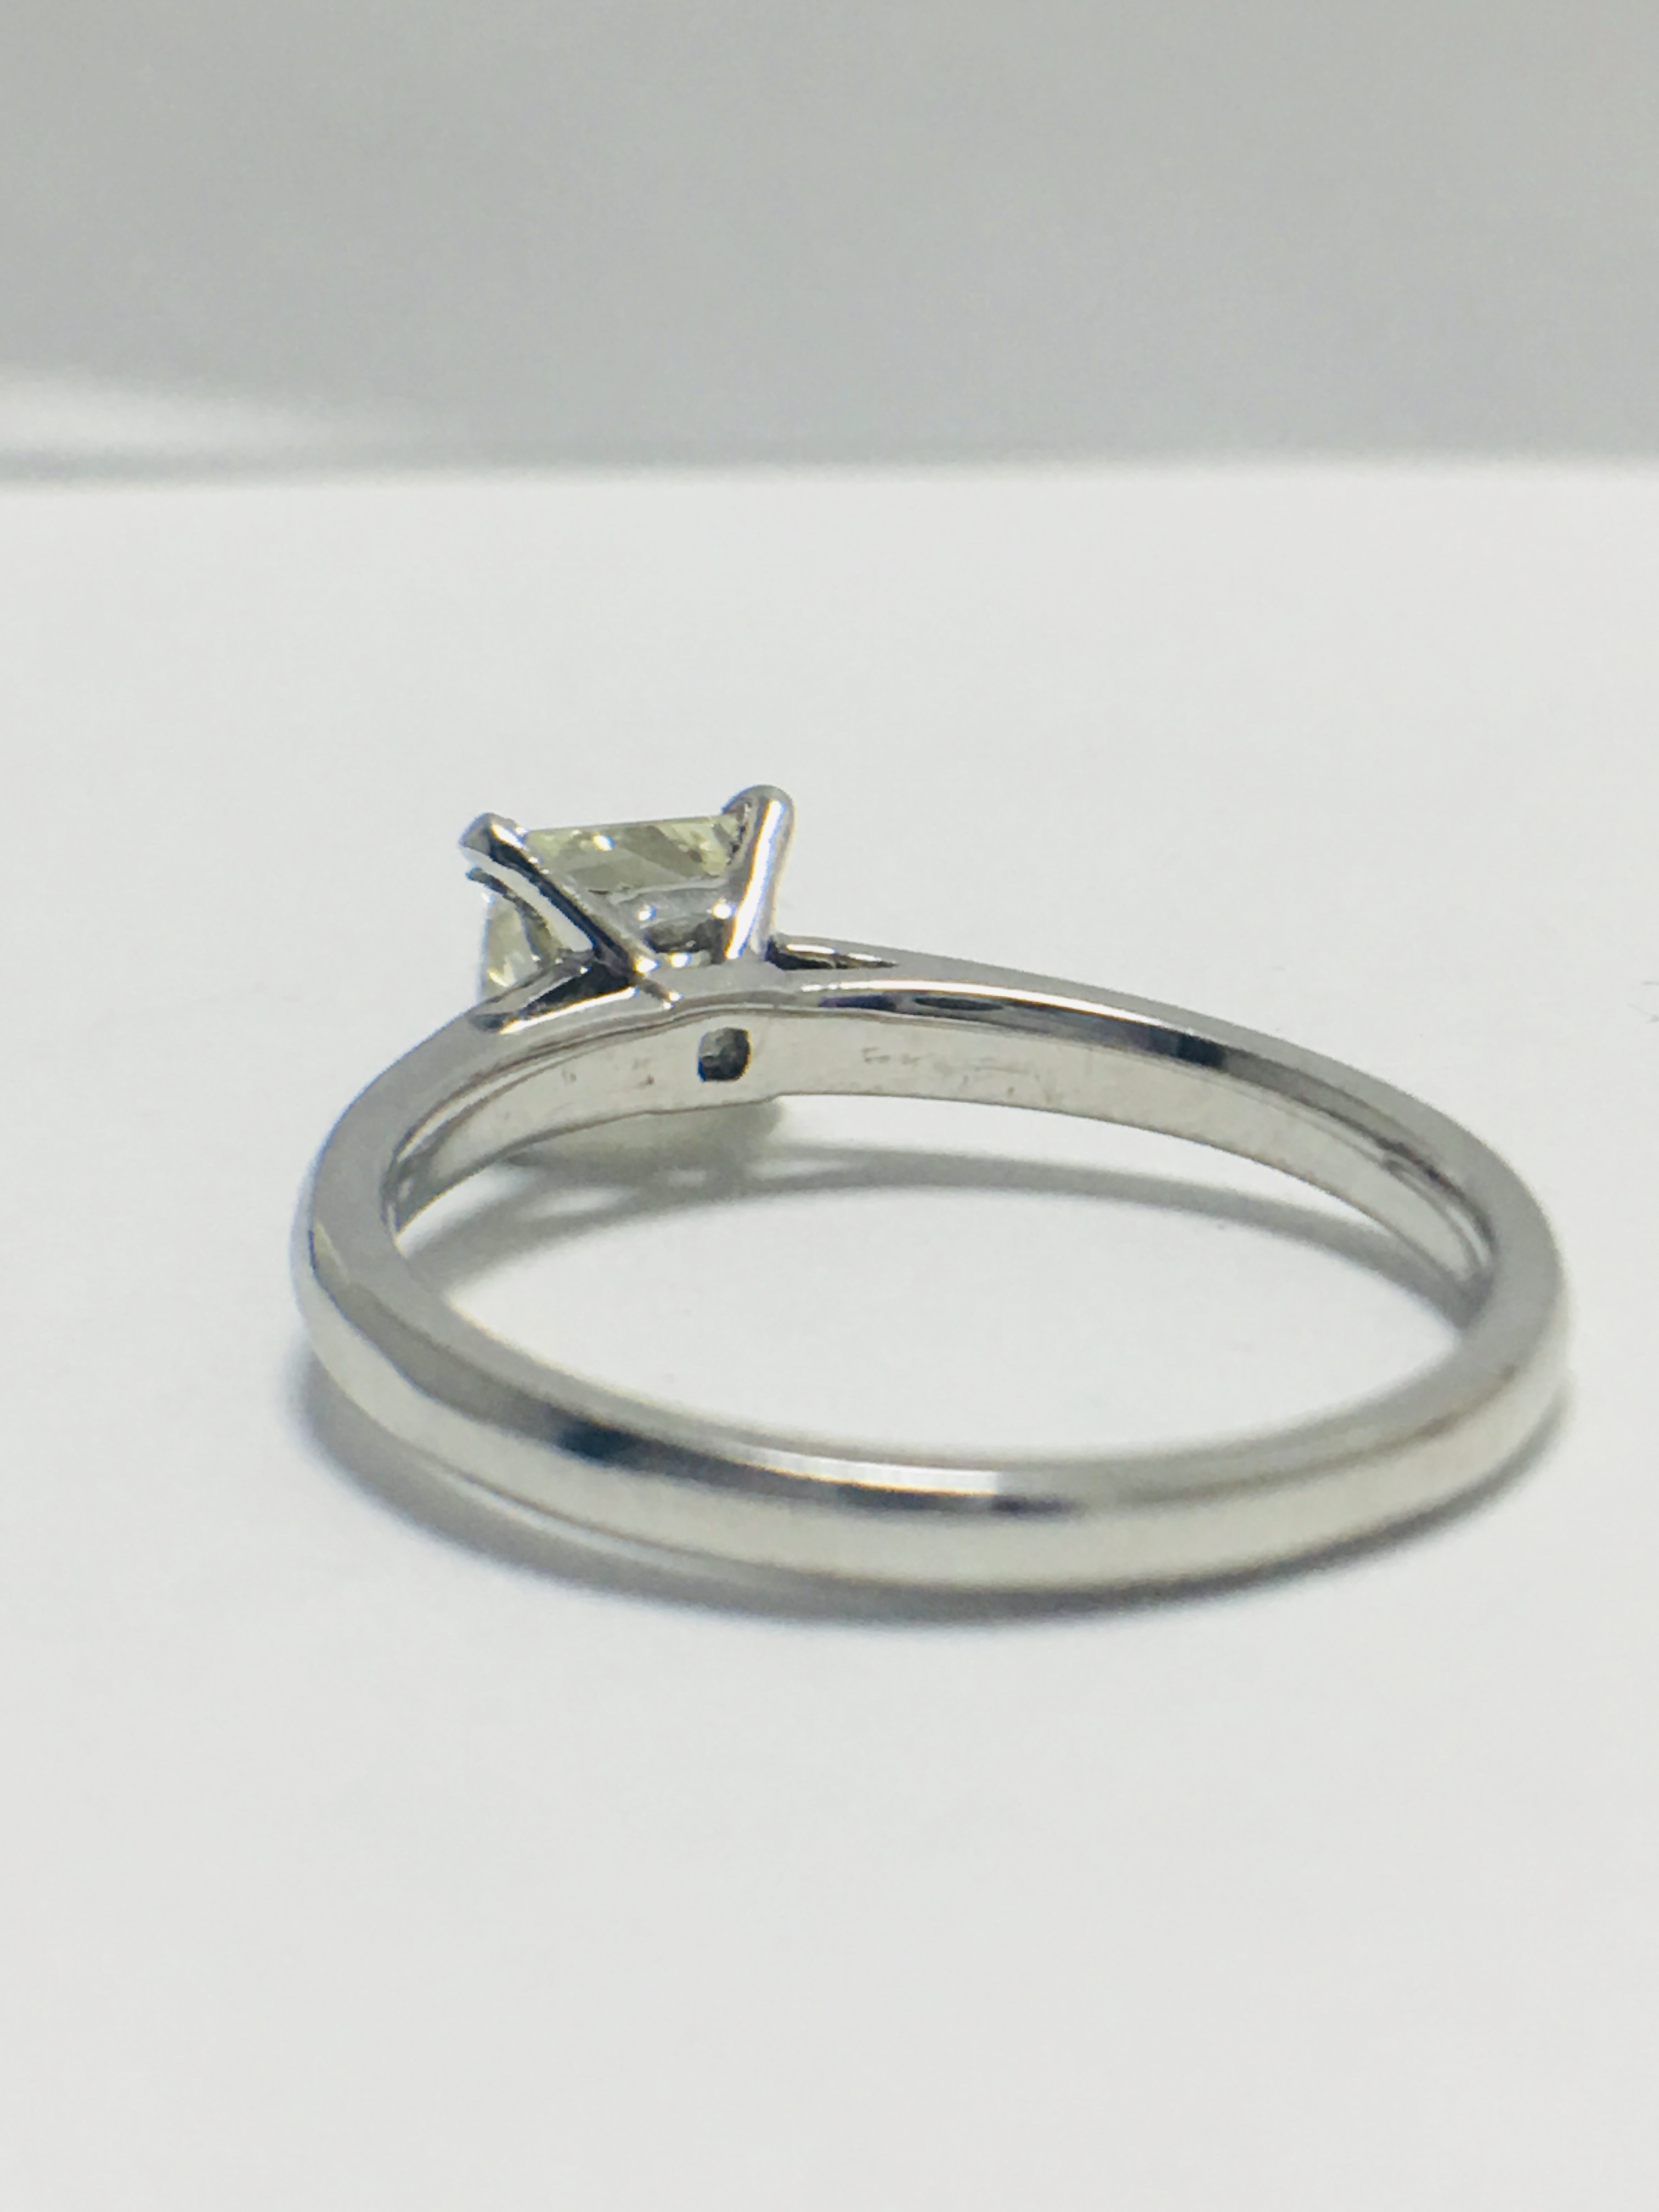 1ct Natural Princes Cut diamond platinum ring - Image 3 of 10